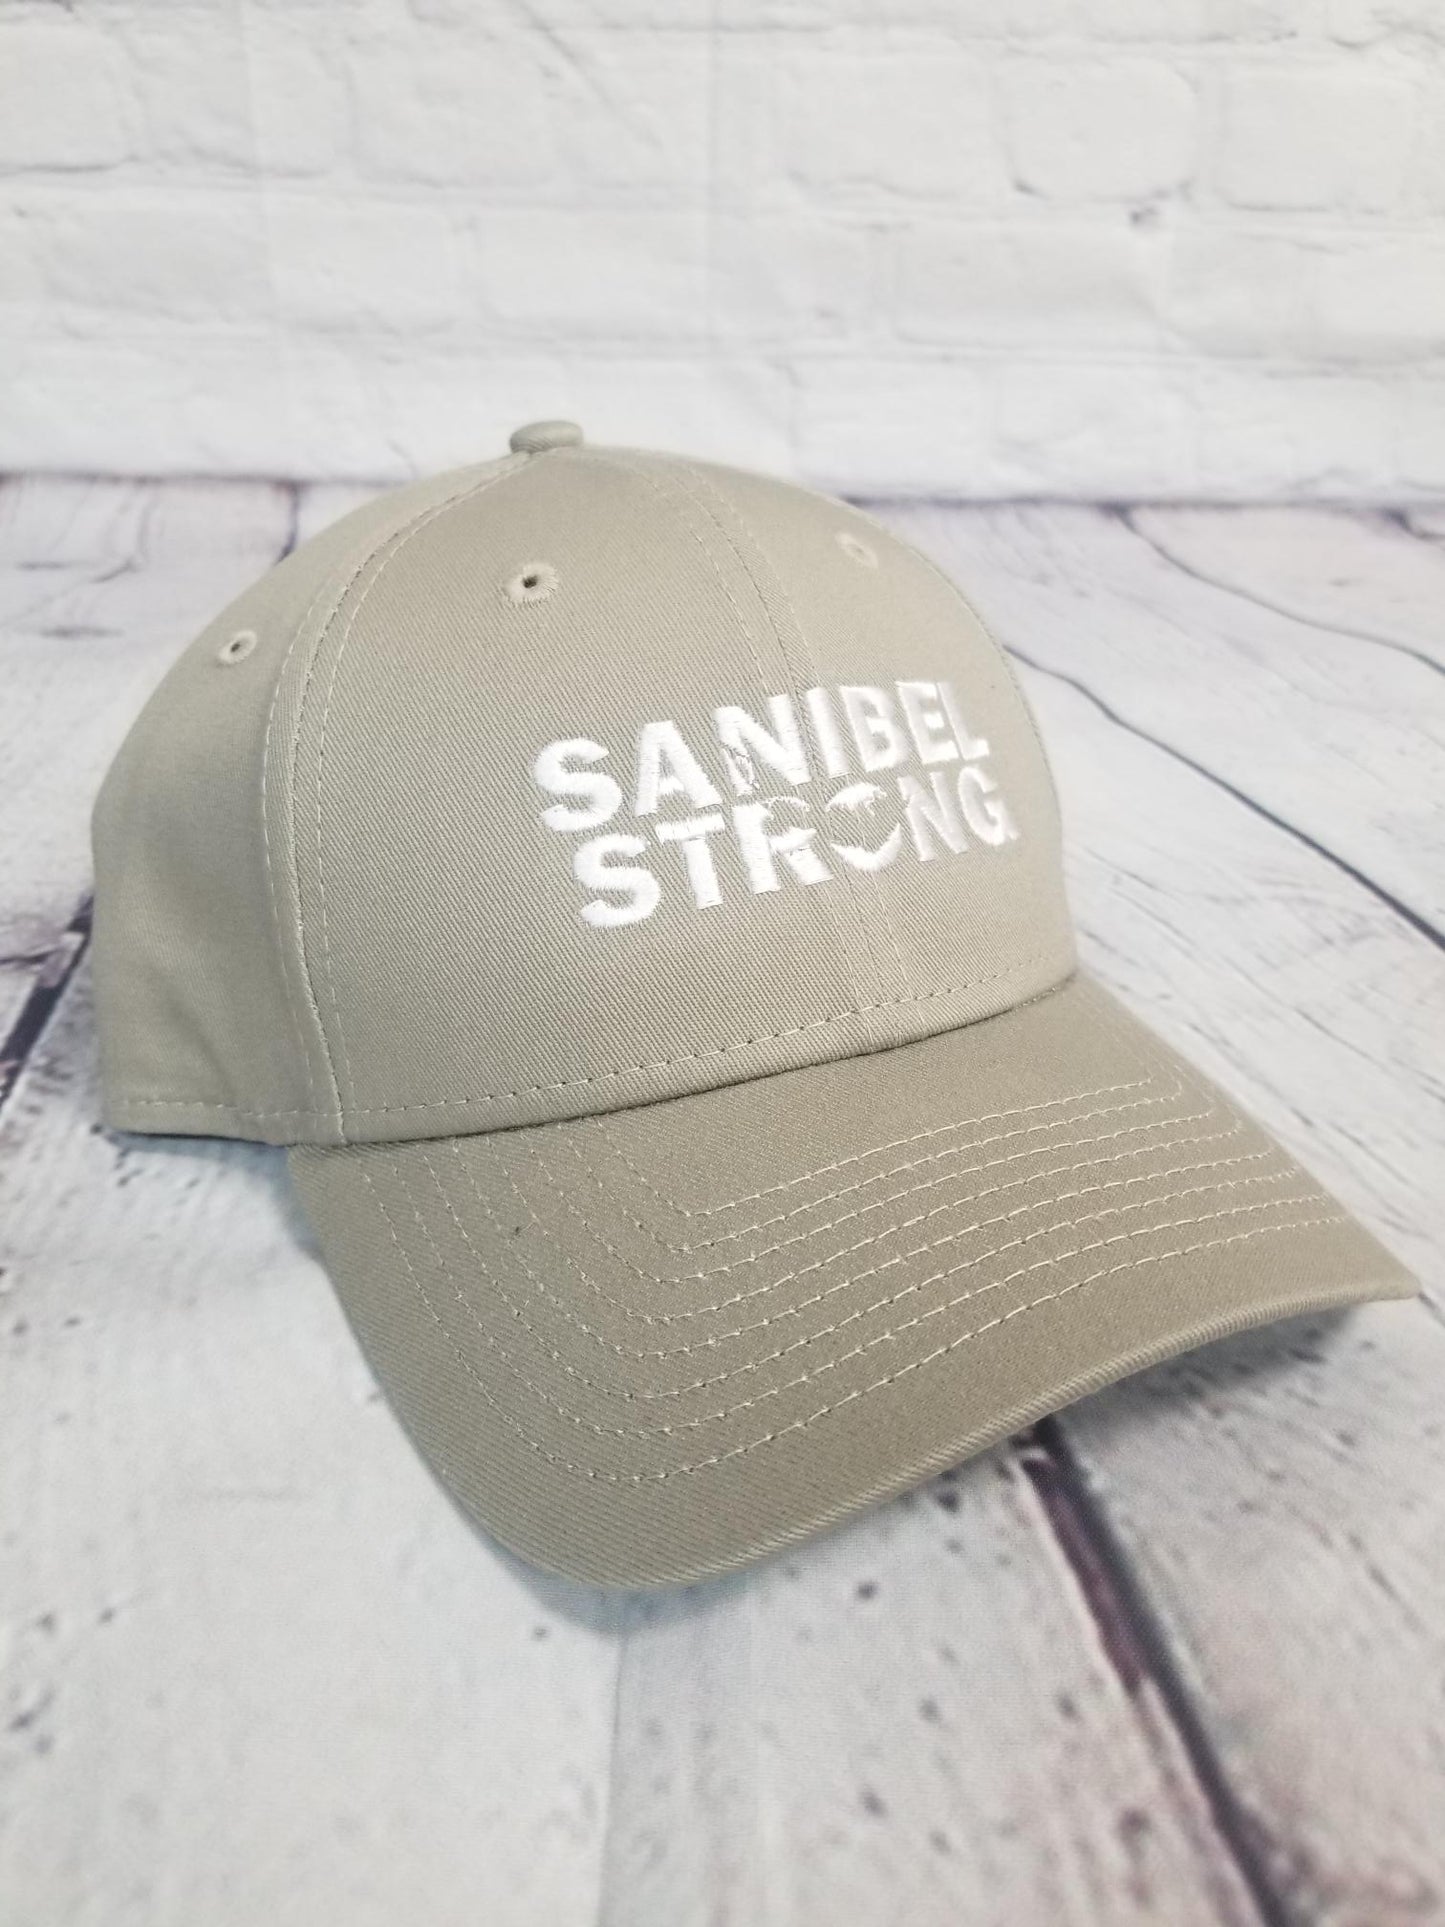 Sanibel Strong Cap